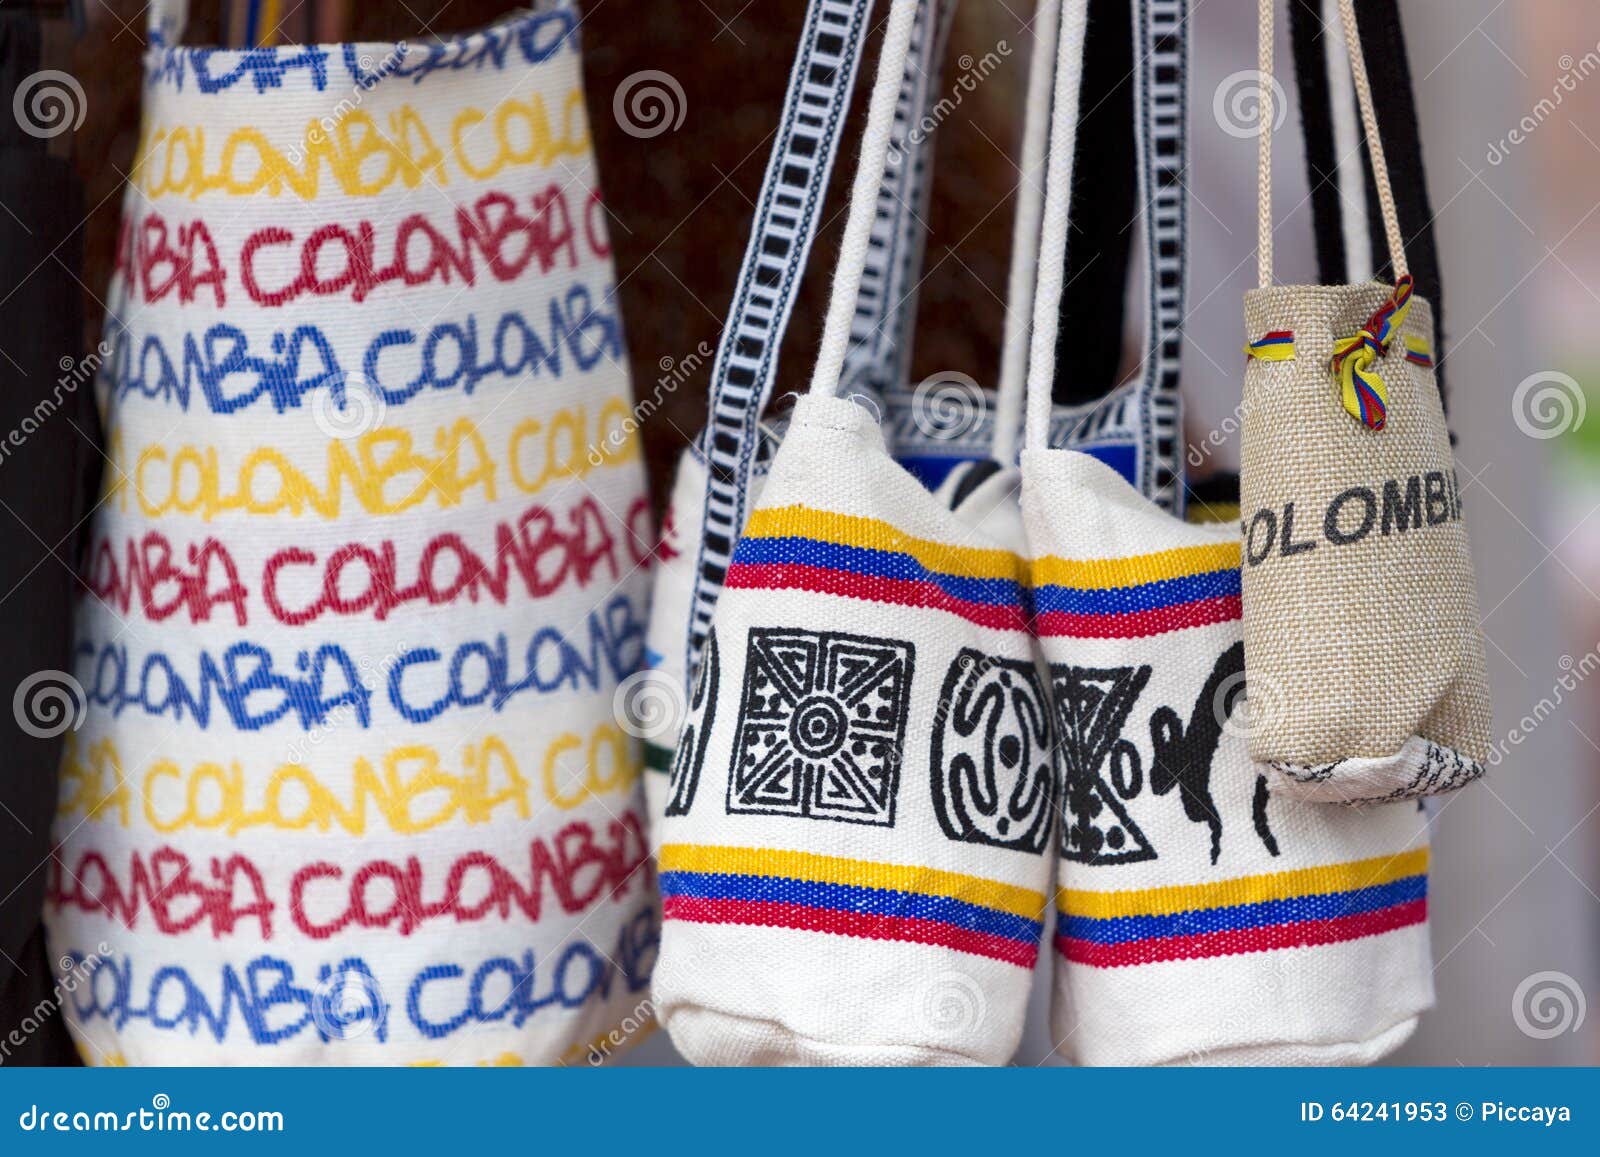 souvenir bags for sale in tourist market, bogota - colombia